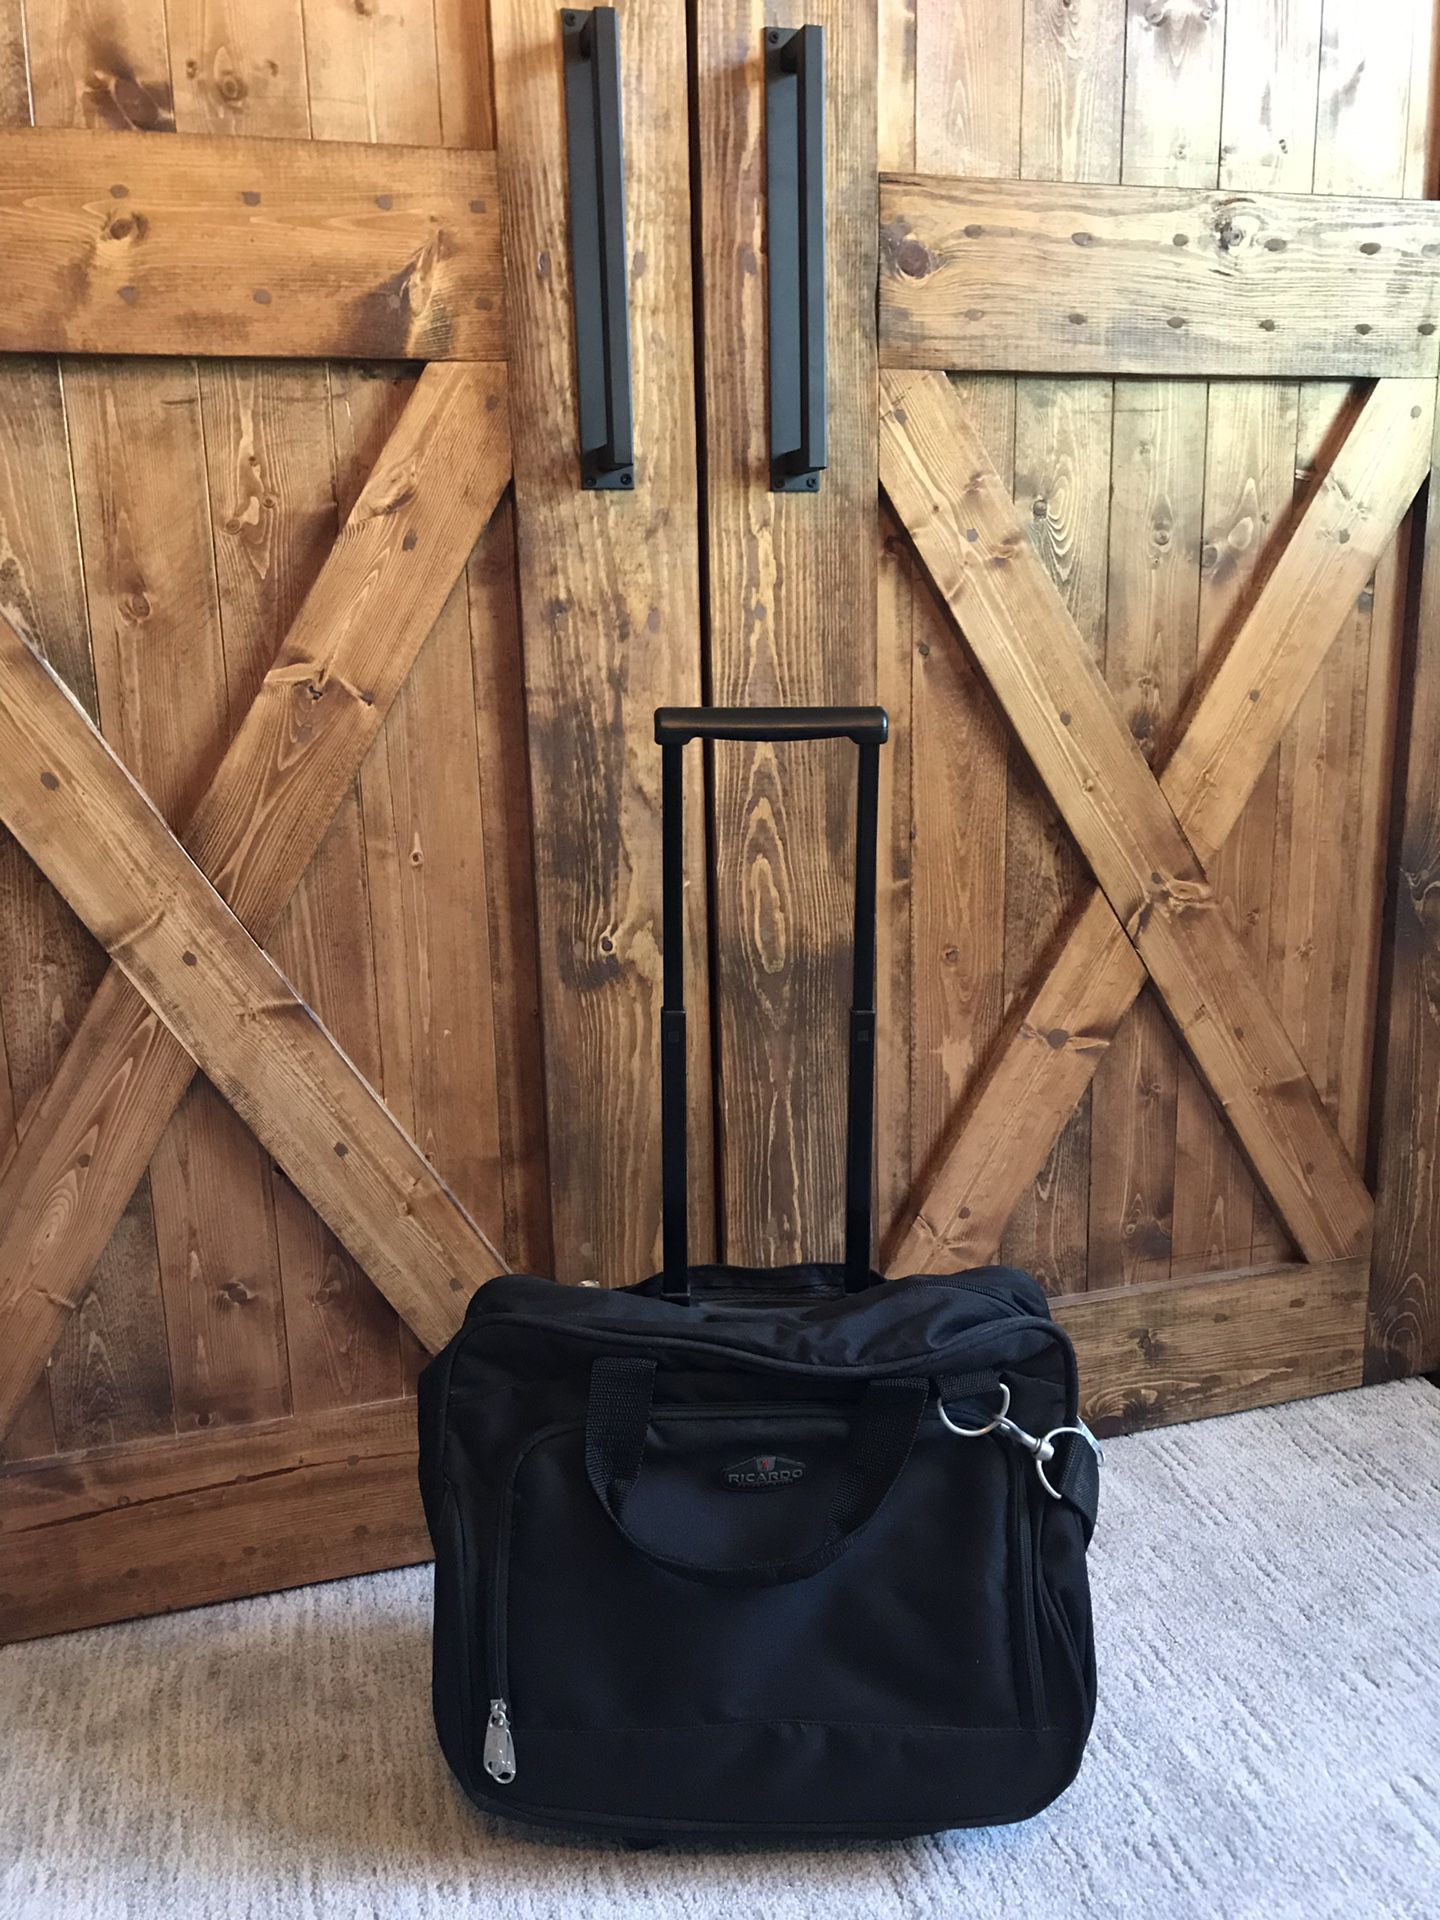 Black laptop suitcase - carry on size